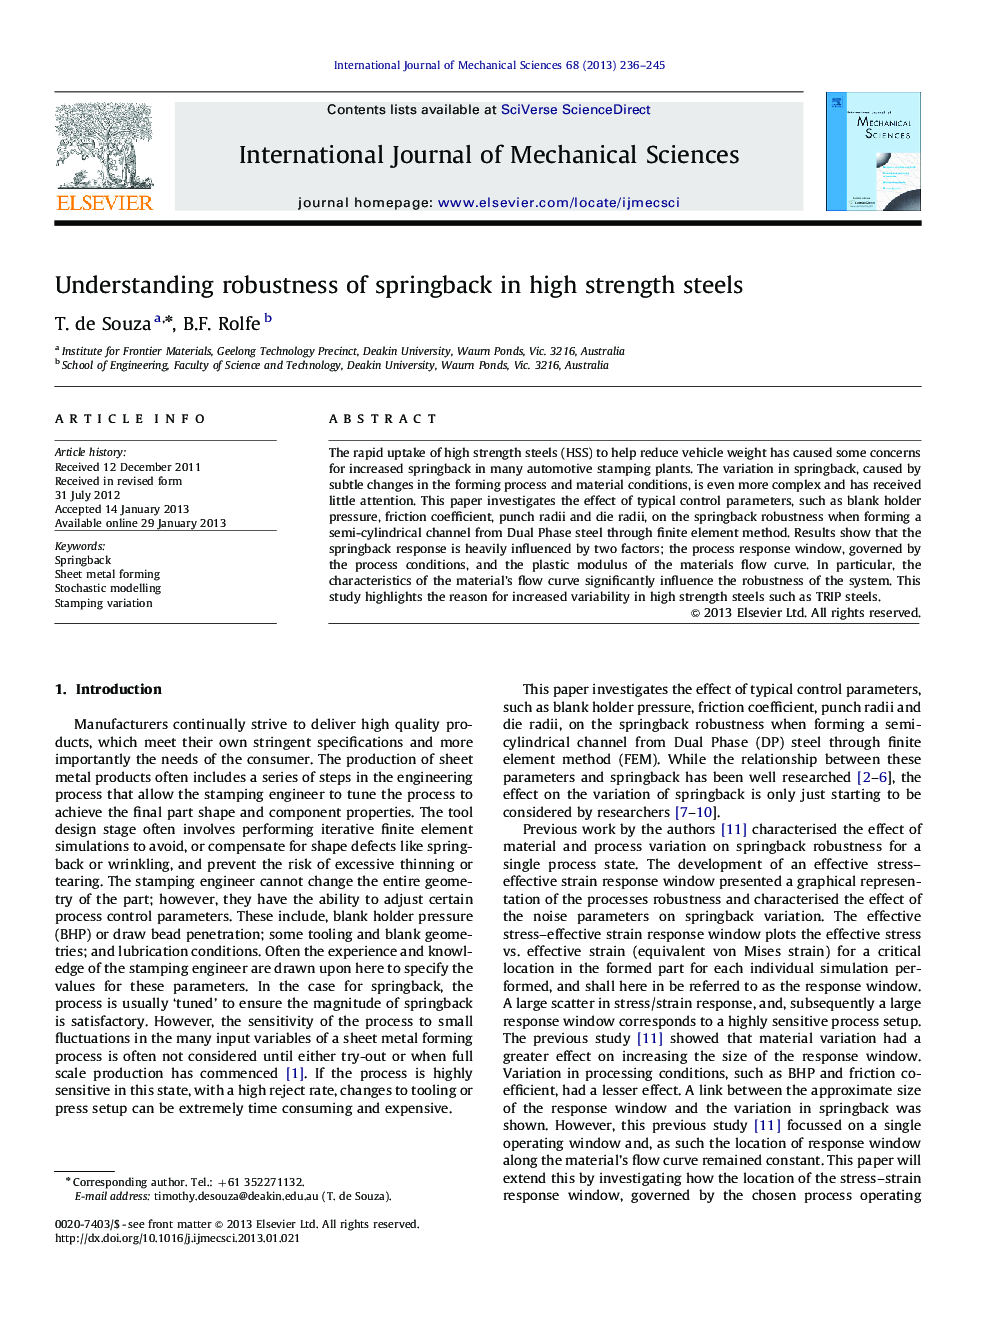 Understanding robustness of springback in high strength steels